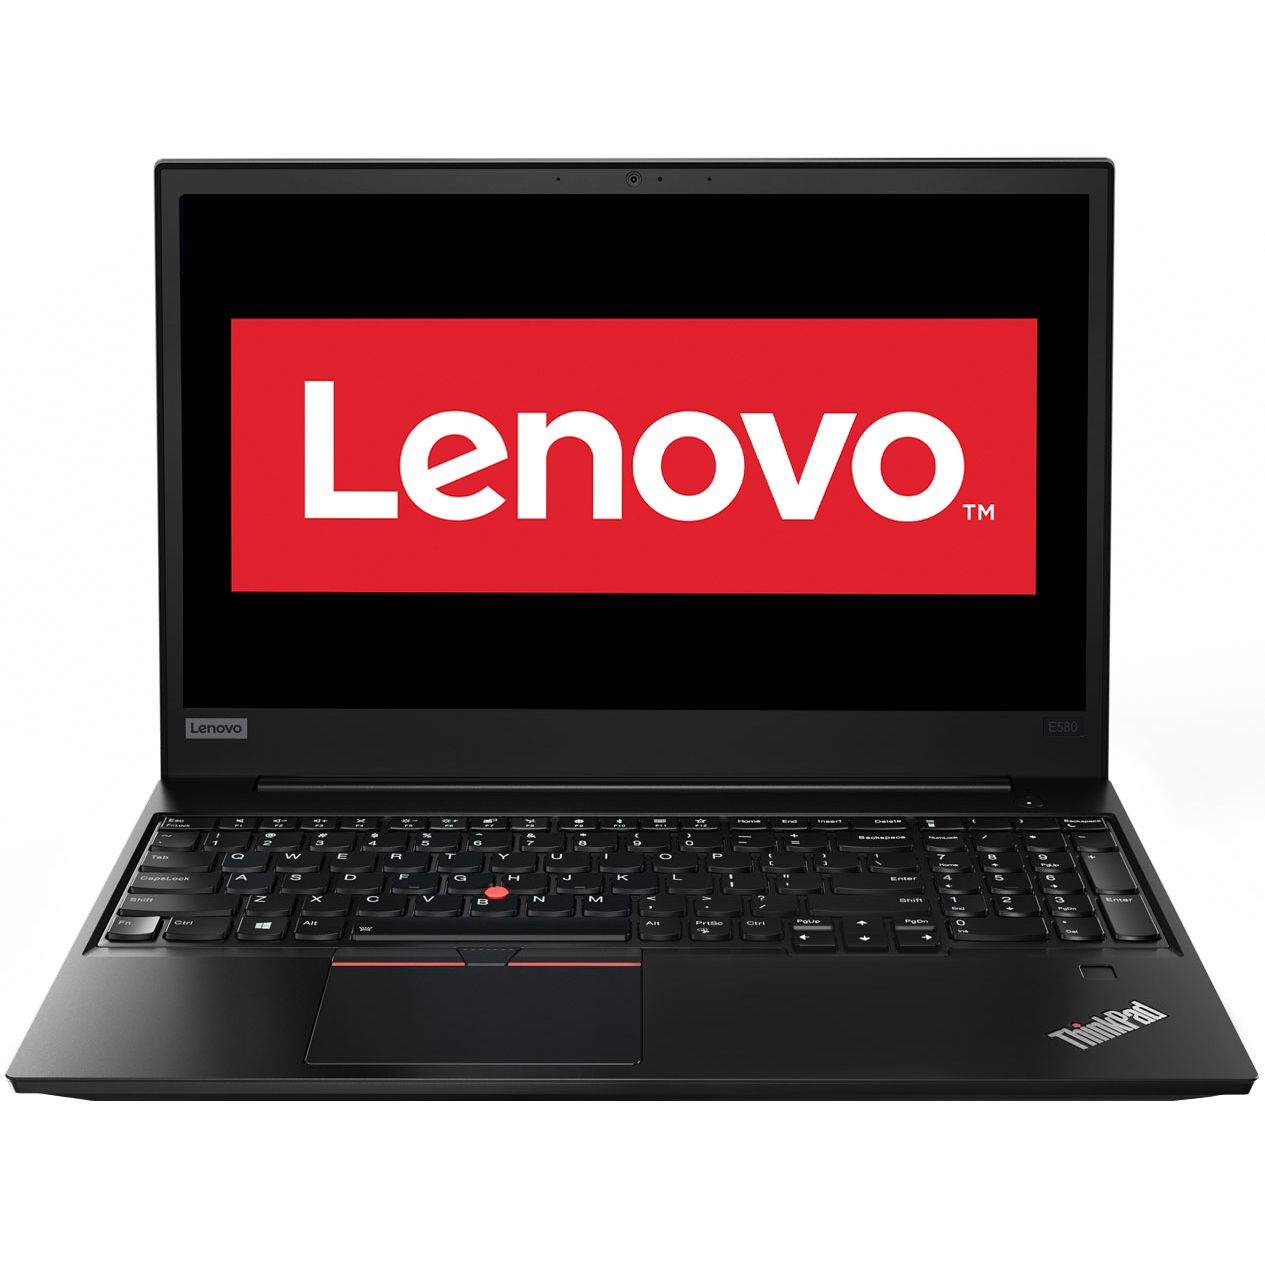 Notebook Lenovo ThinkPad E580 15.6 Full HD Intel Core i7-8550U RAM 8GB SSD 256GB No OS Negru title=Notebook Lenovo ThinkPad E580 15.6 Full HD Intel Core i7-8550U RAM 8GB SSD 256GB No OS Negru